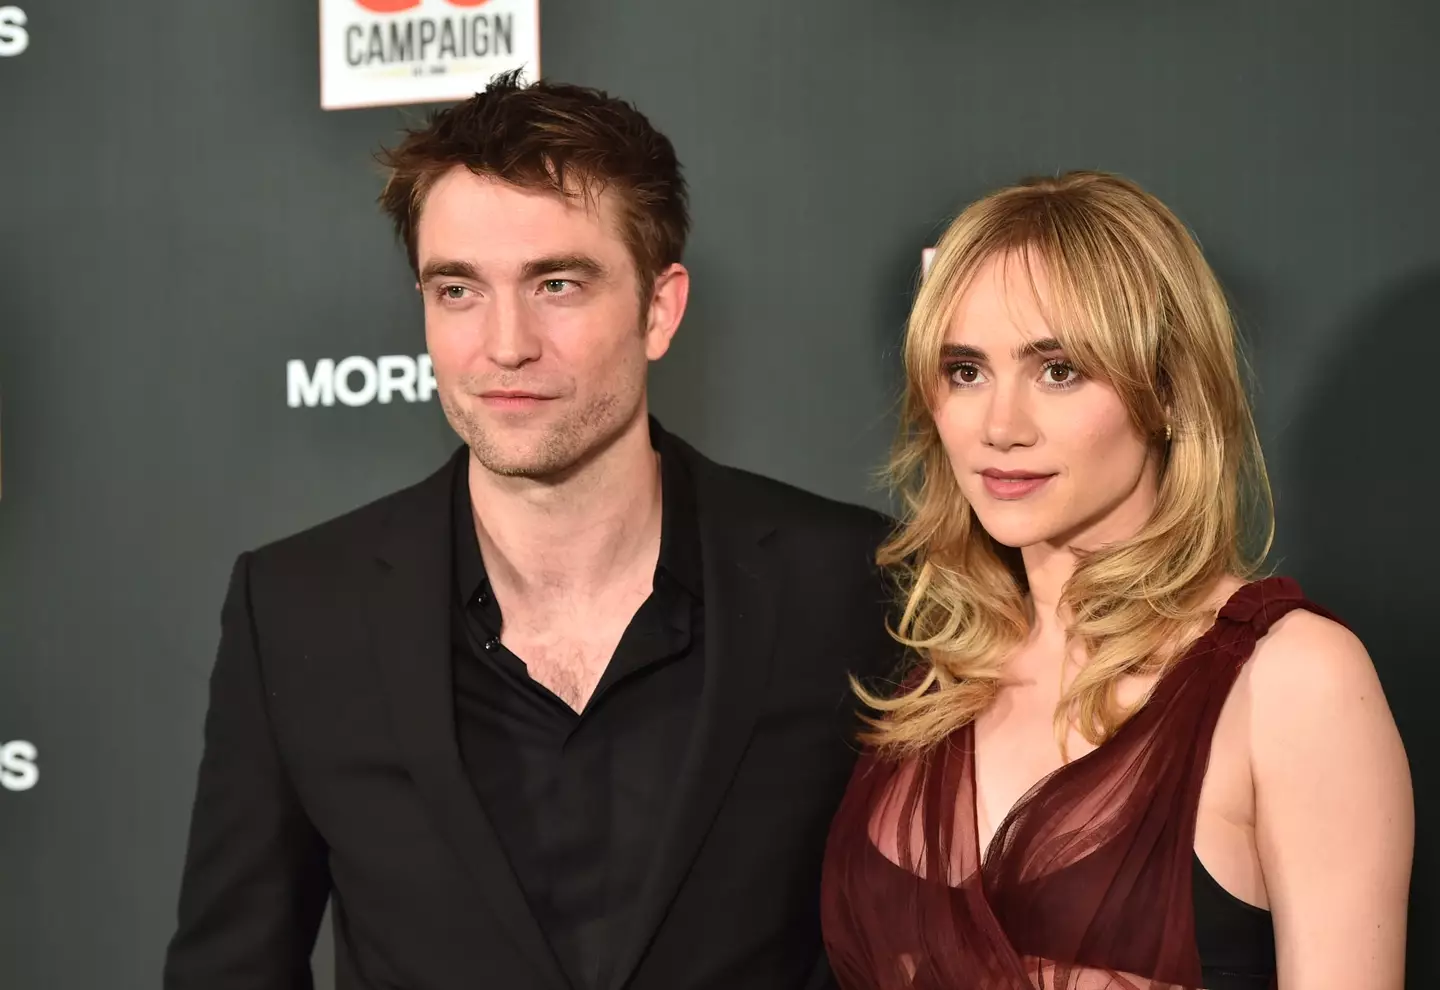 Robert Pattinson and Suki Waterhouse have been dating since 2018.